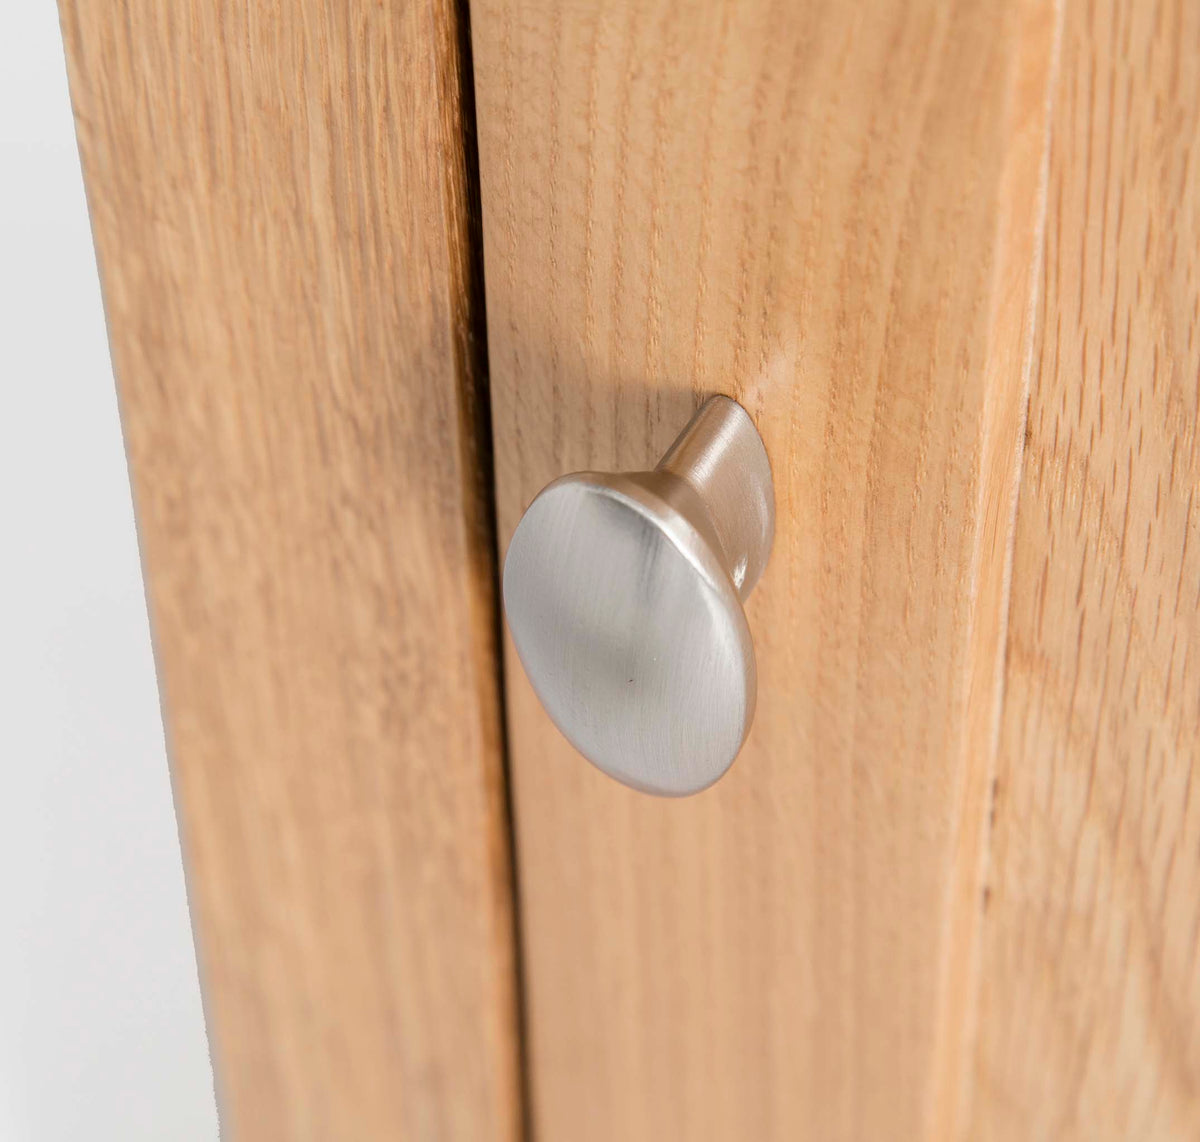 Hampshire Oak Lamp Table - Close up of cupboard handle